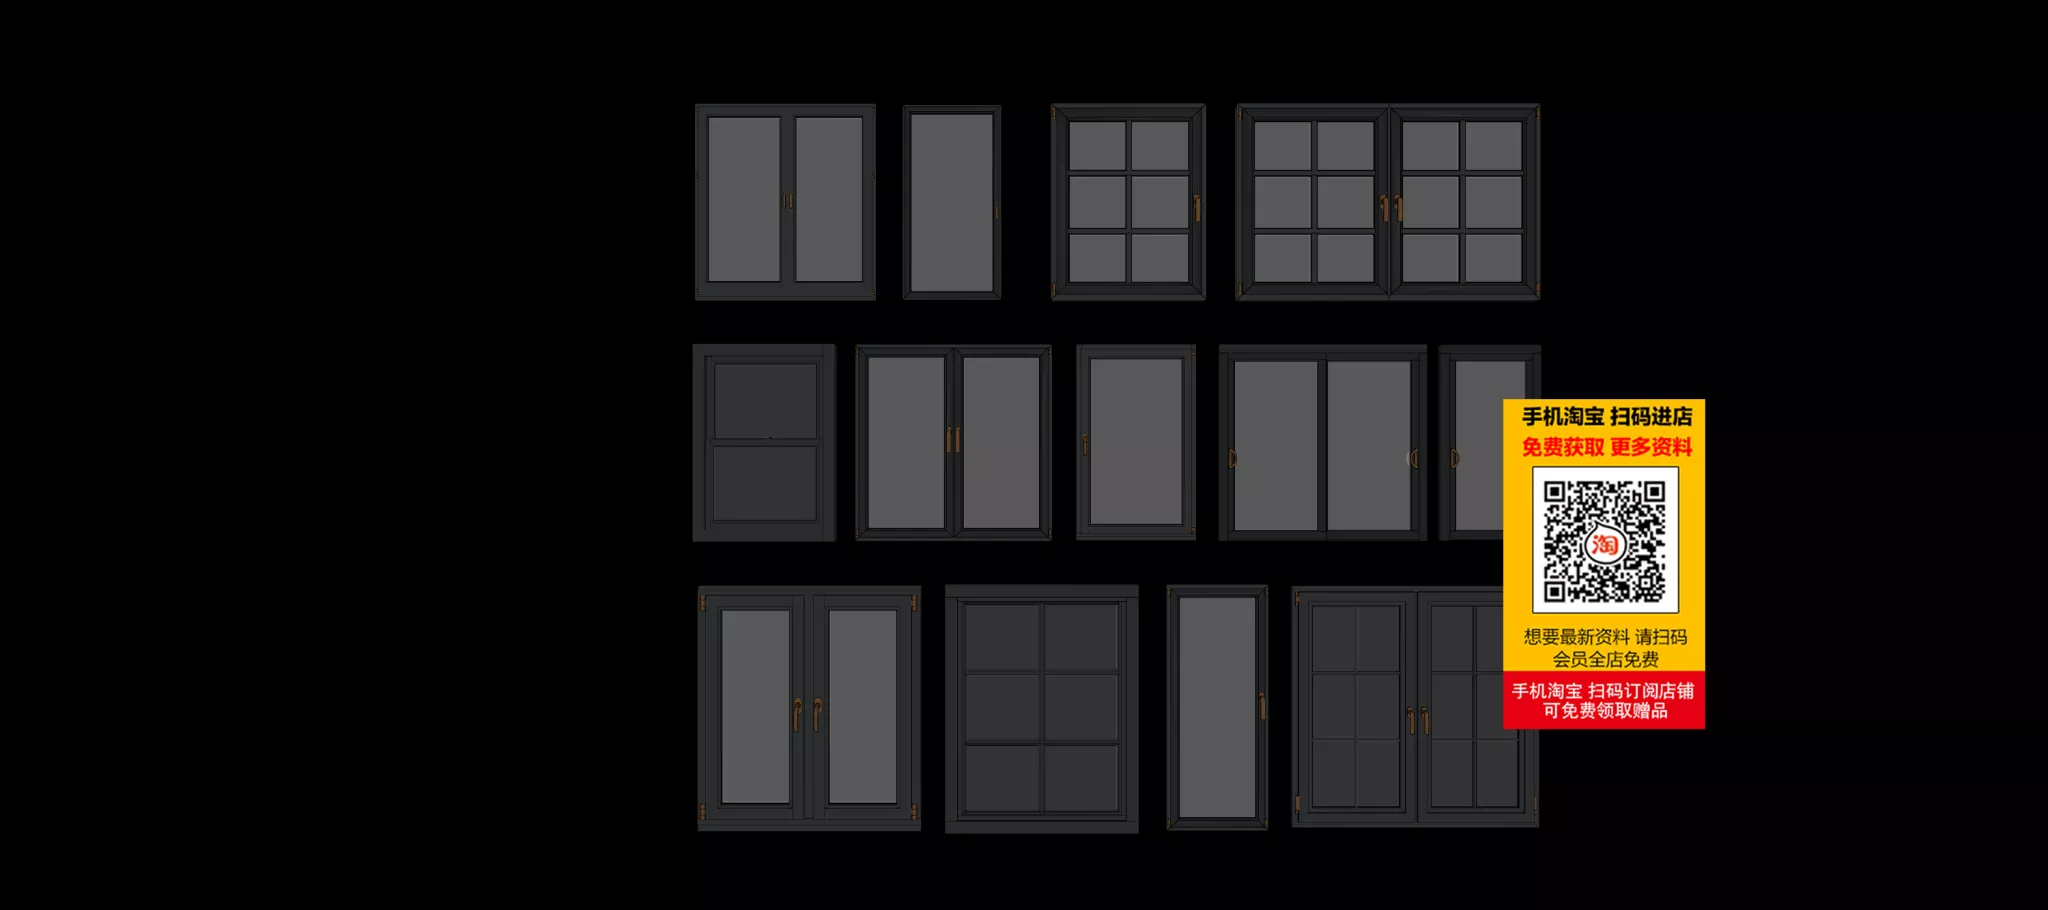 MODERN WINDOWS - SKETCHUP 3D MODEL - VRAY OR ENSCAPE - ID16738